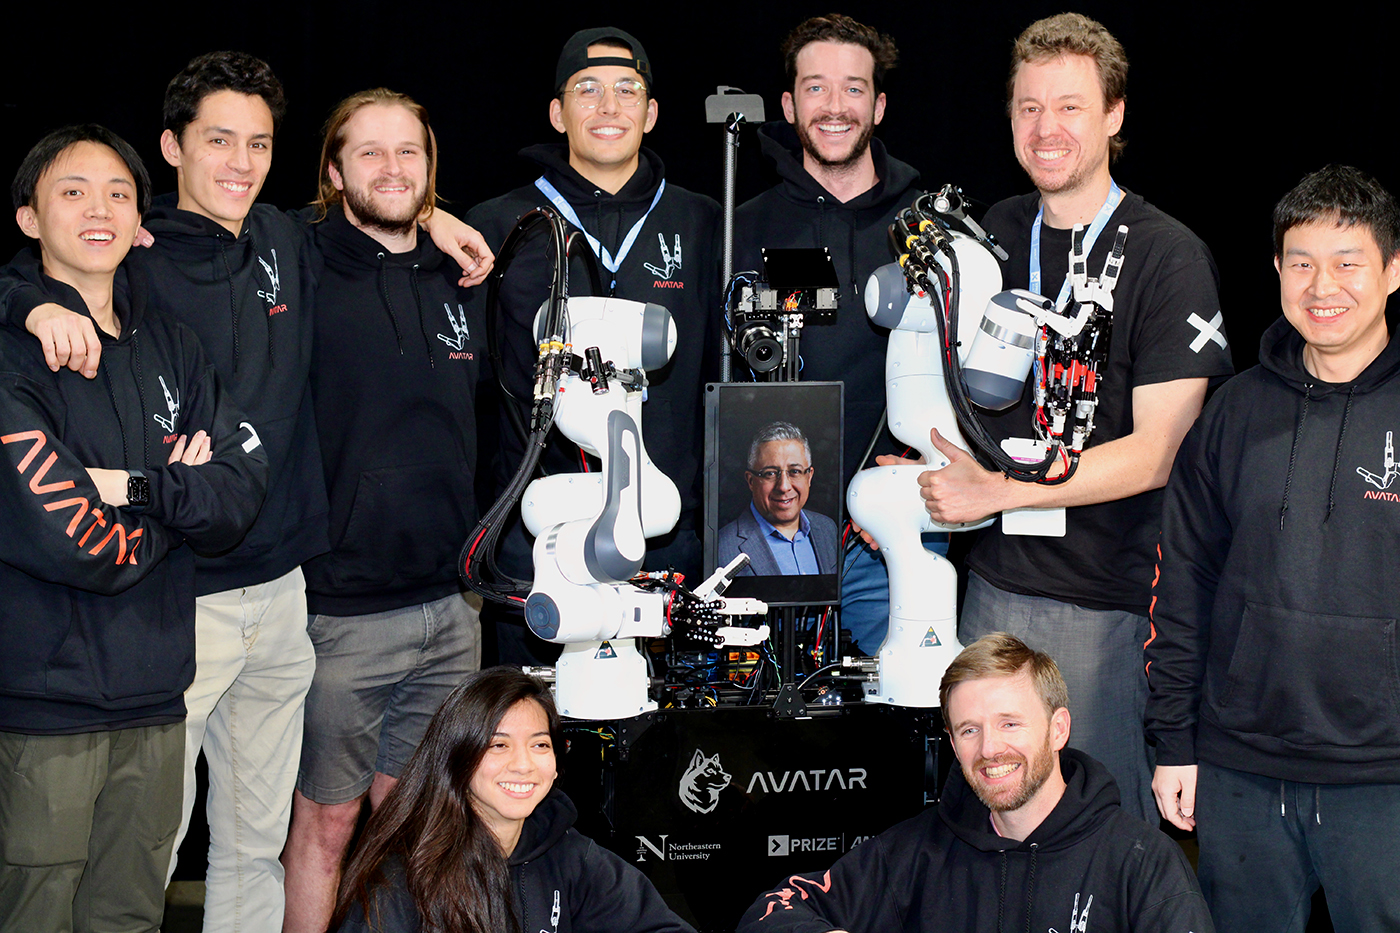 A group photo of the Northeastern Robotics team